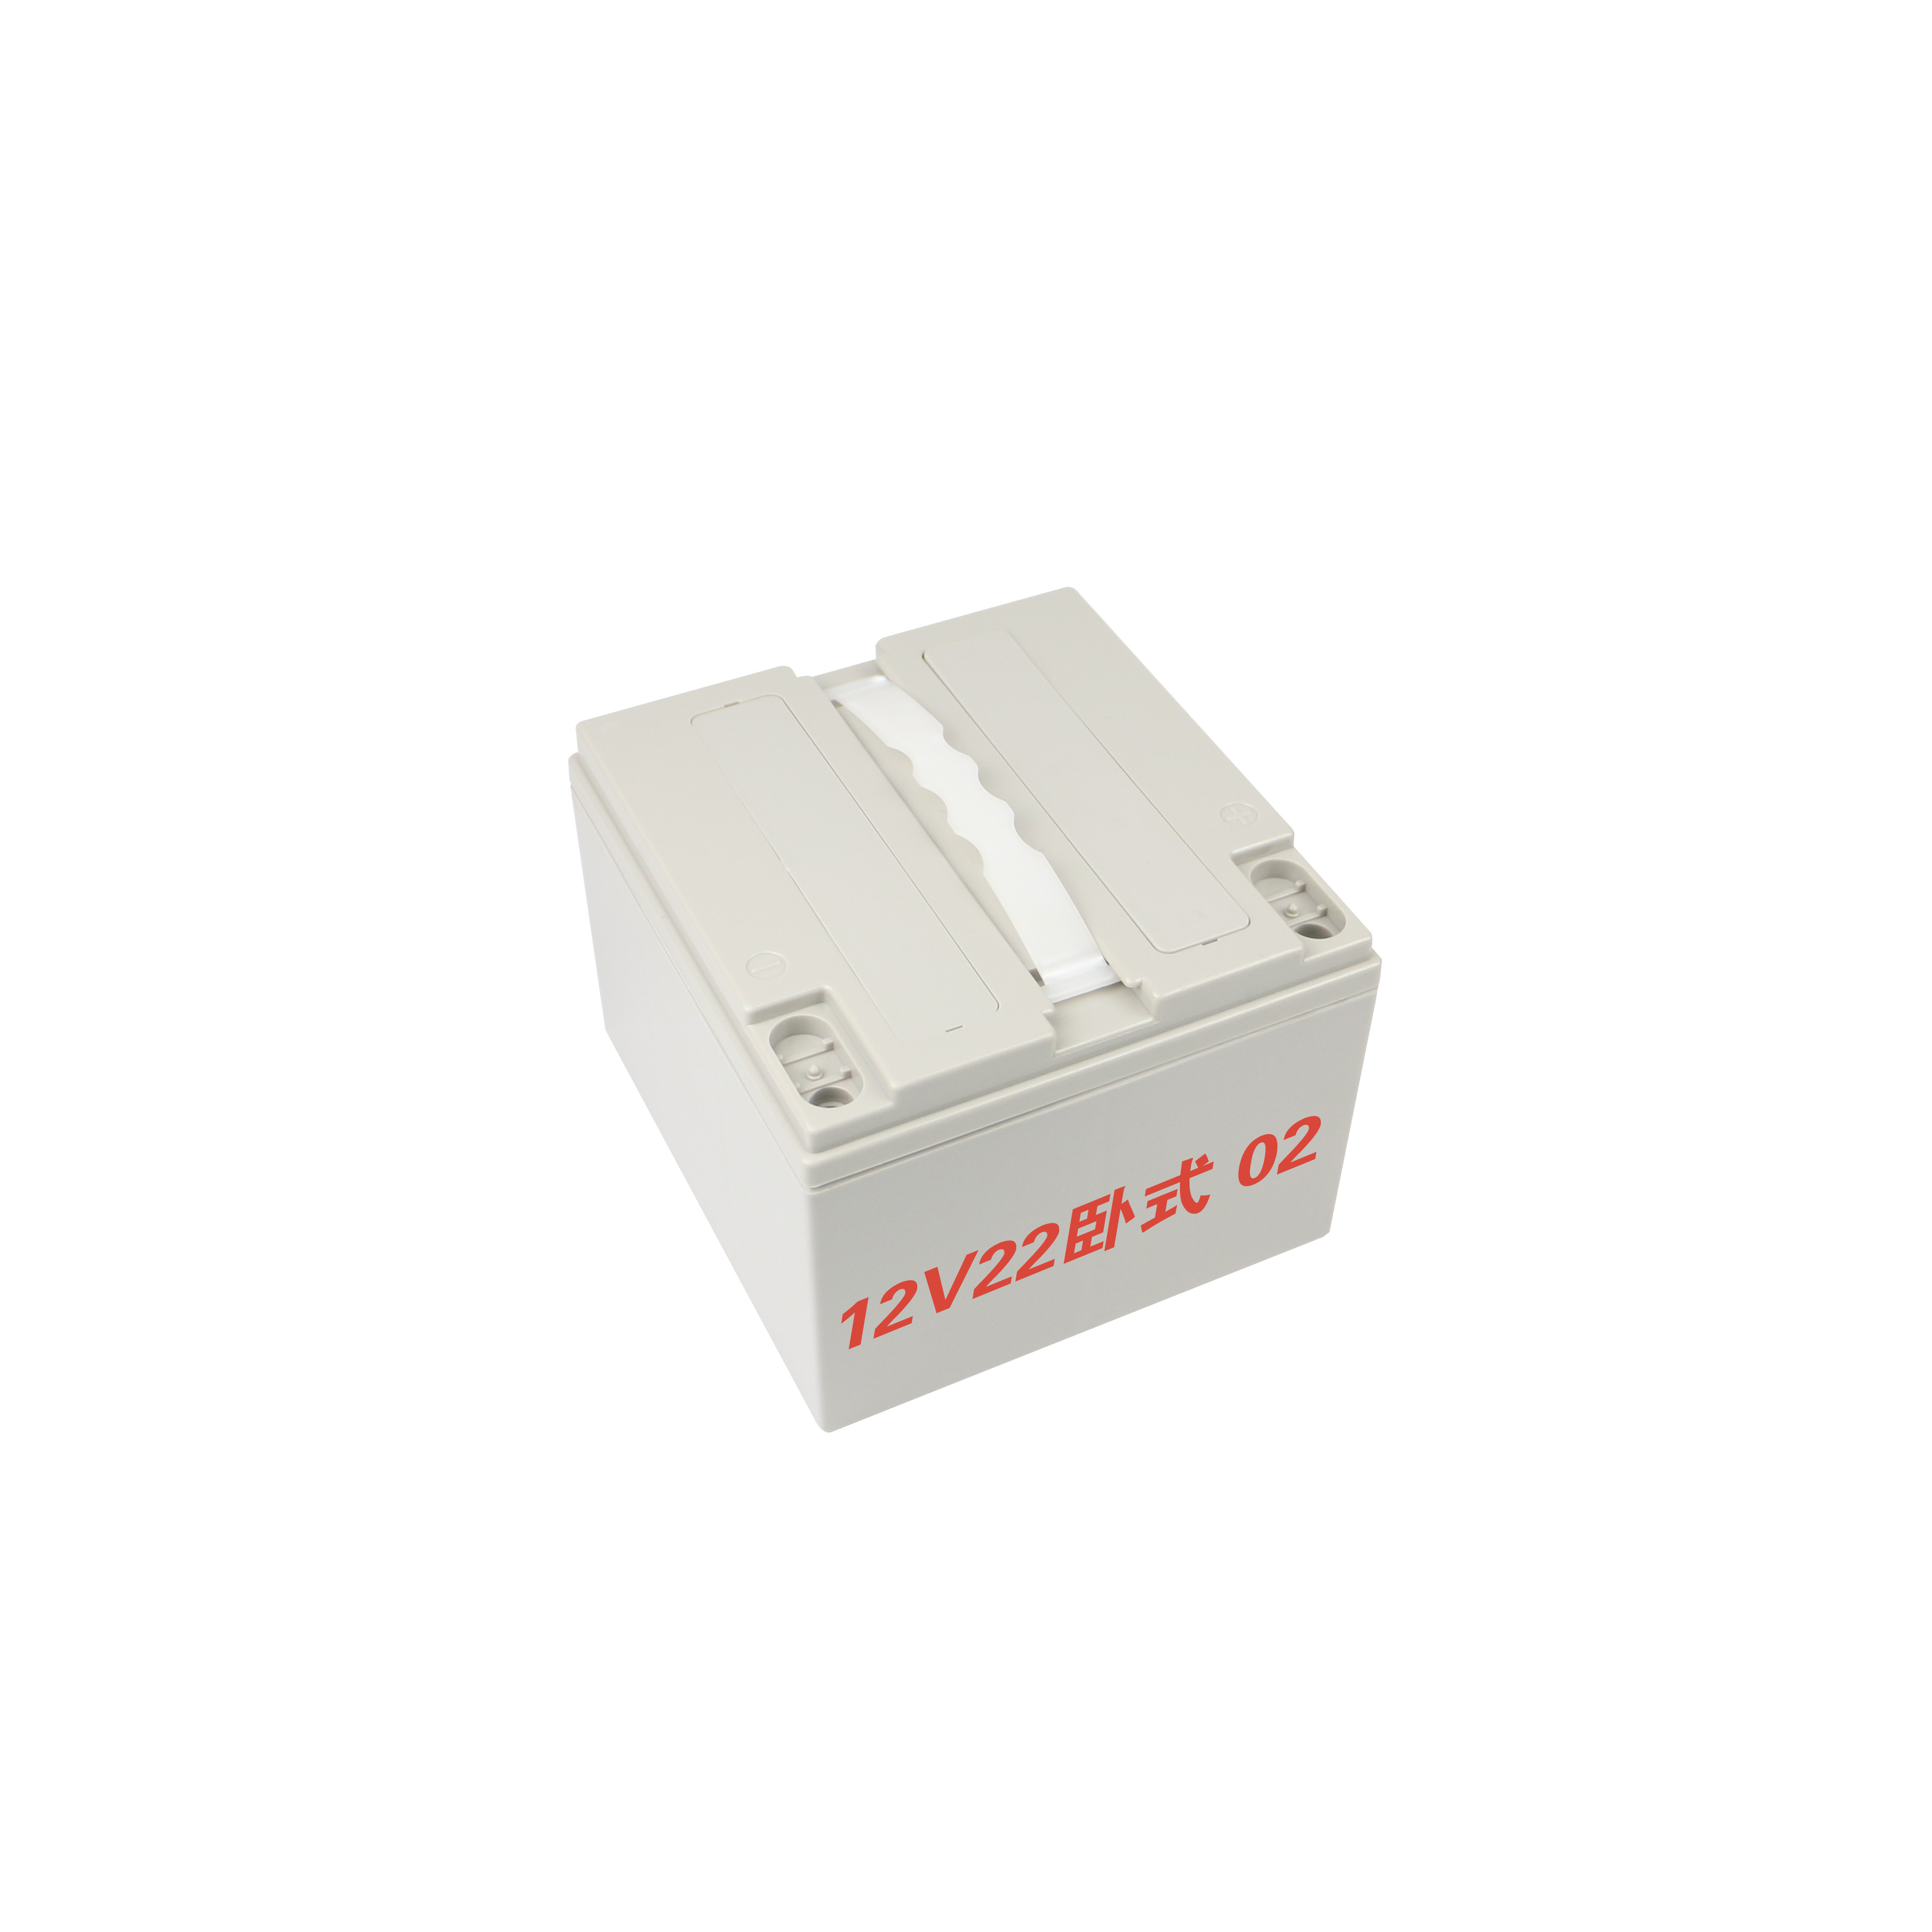 12V22 03 Plastic Battery Mould Box size 181.6*76.5*165.5mm For E-Bike Battery